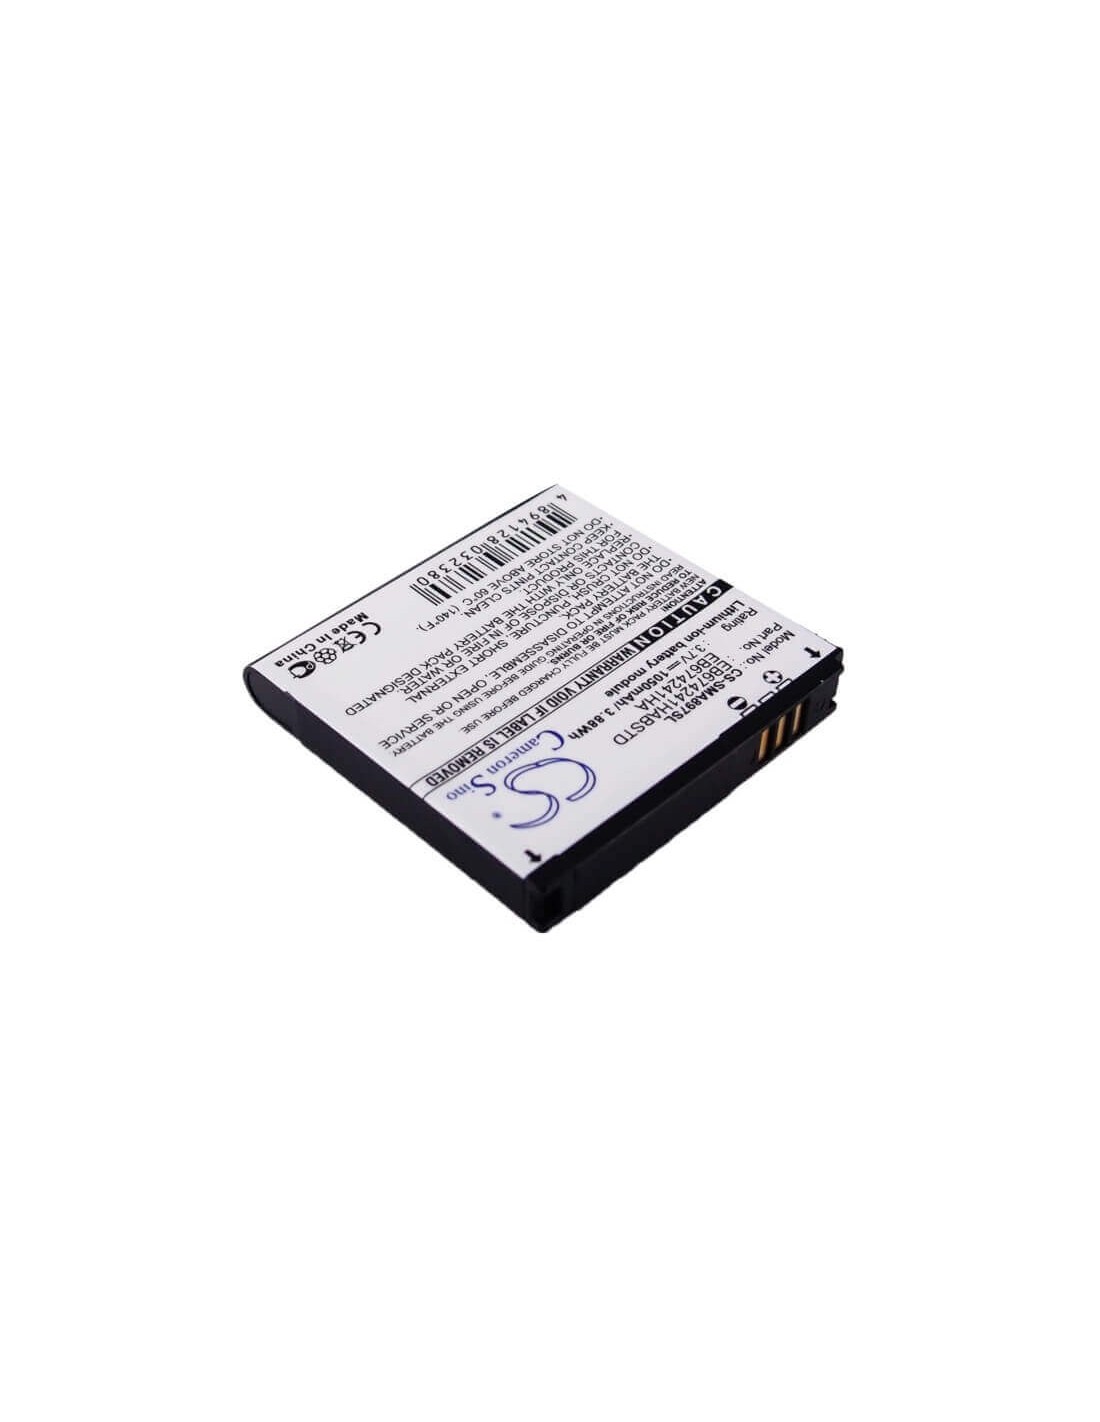 Battery for Samsung Mythic SGH-A897, R860, Mythic A897 3.7V, 1050mAh - 3.89Wh